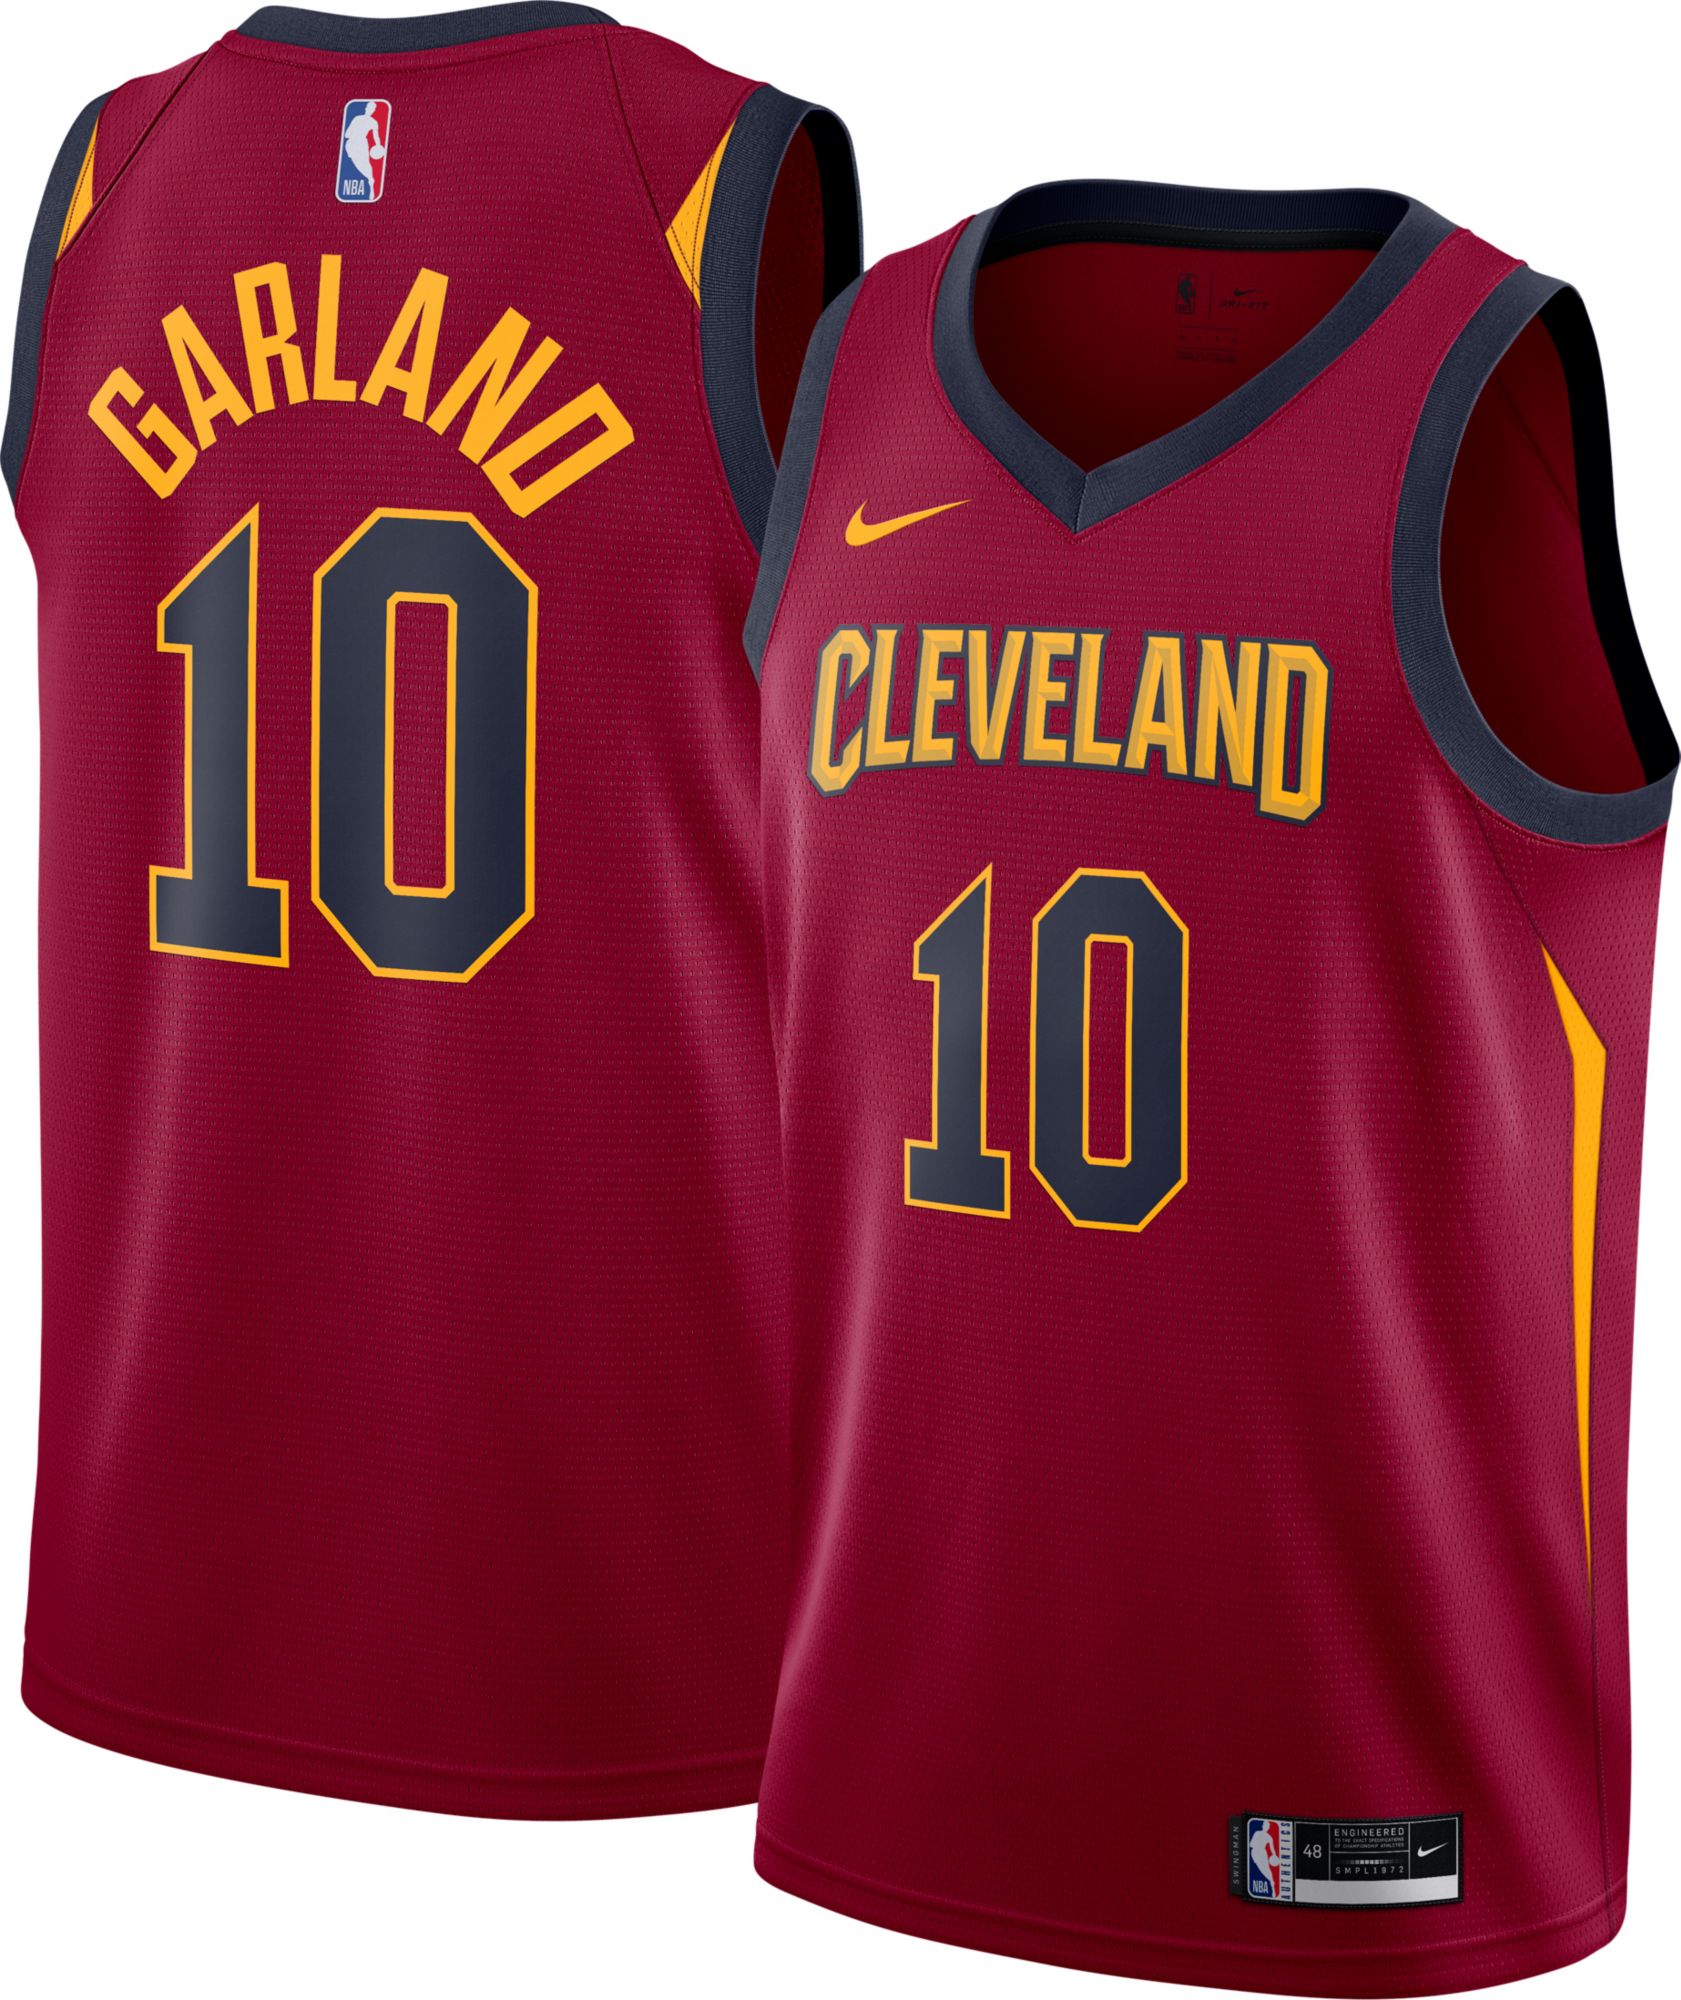 Nike Men's Cleveland Cavaliers Darius Garland #10 White T-Shirt, Large